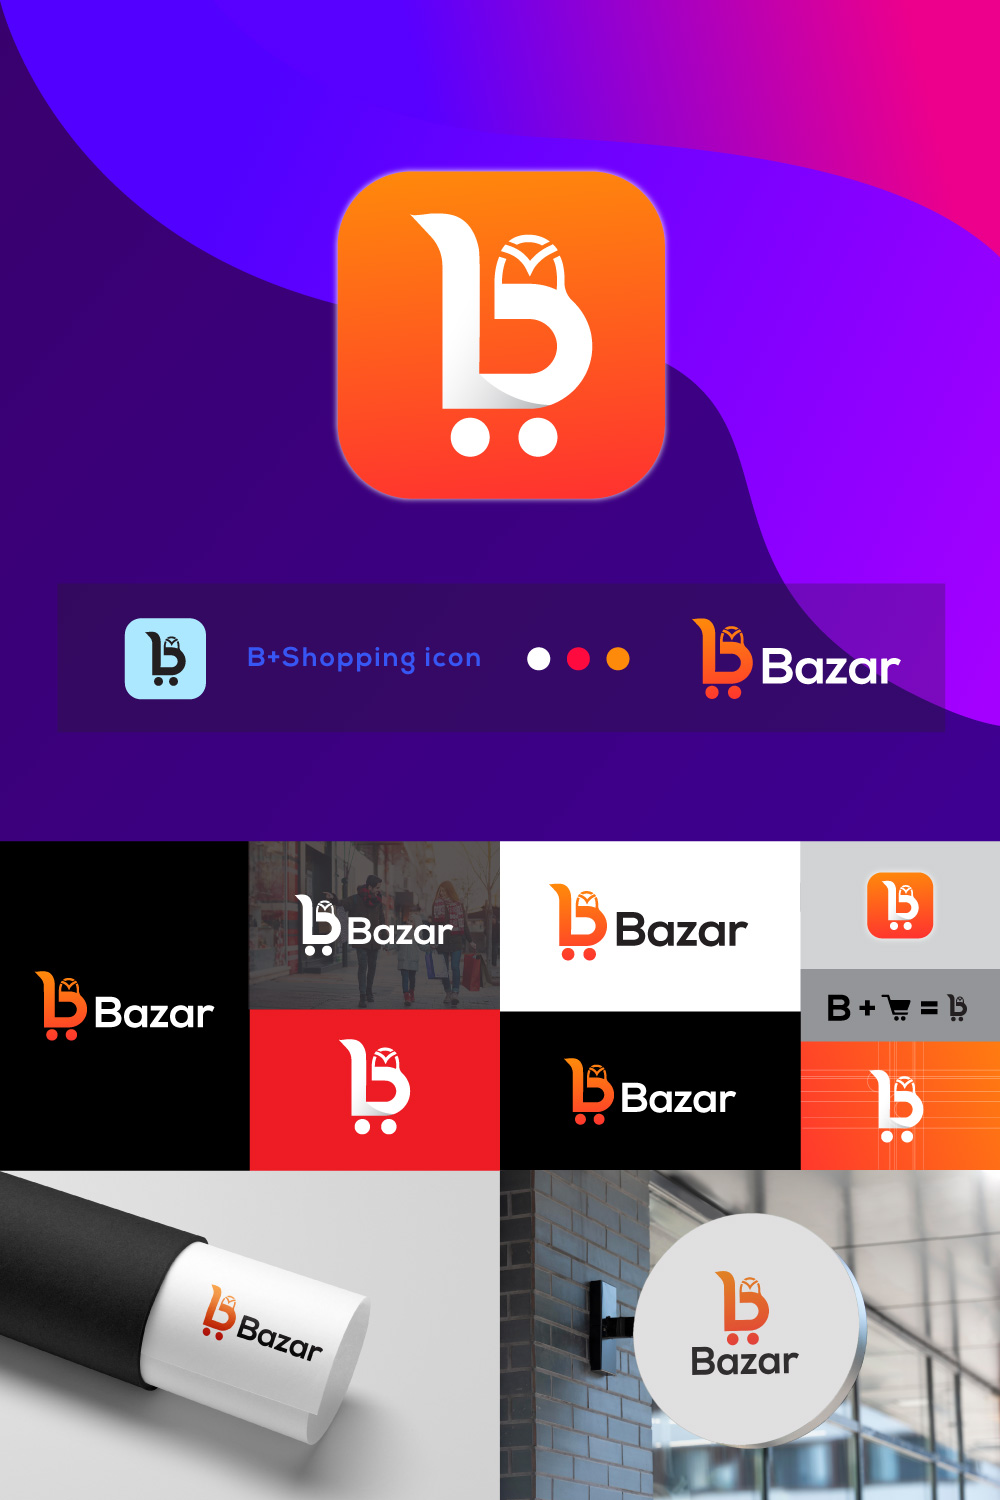 Bazar Shop - Letter B Logo pinterest image.